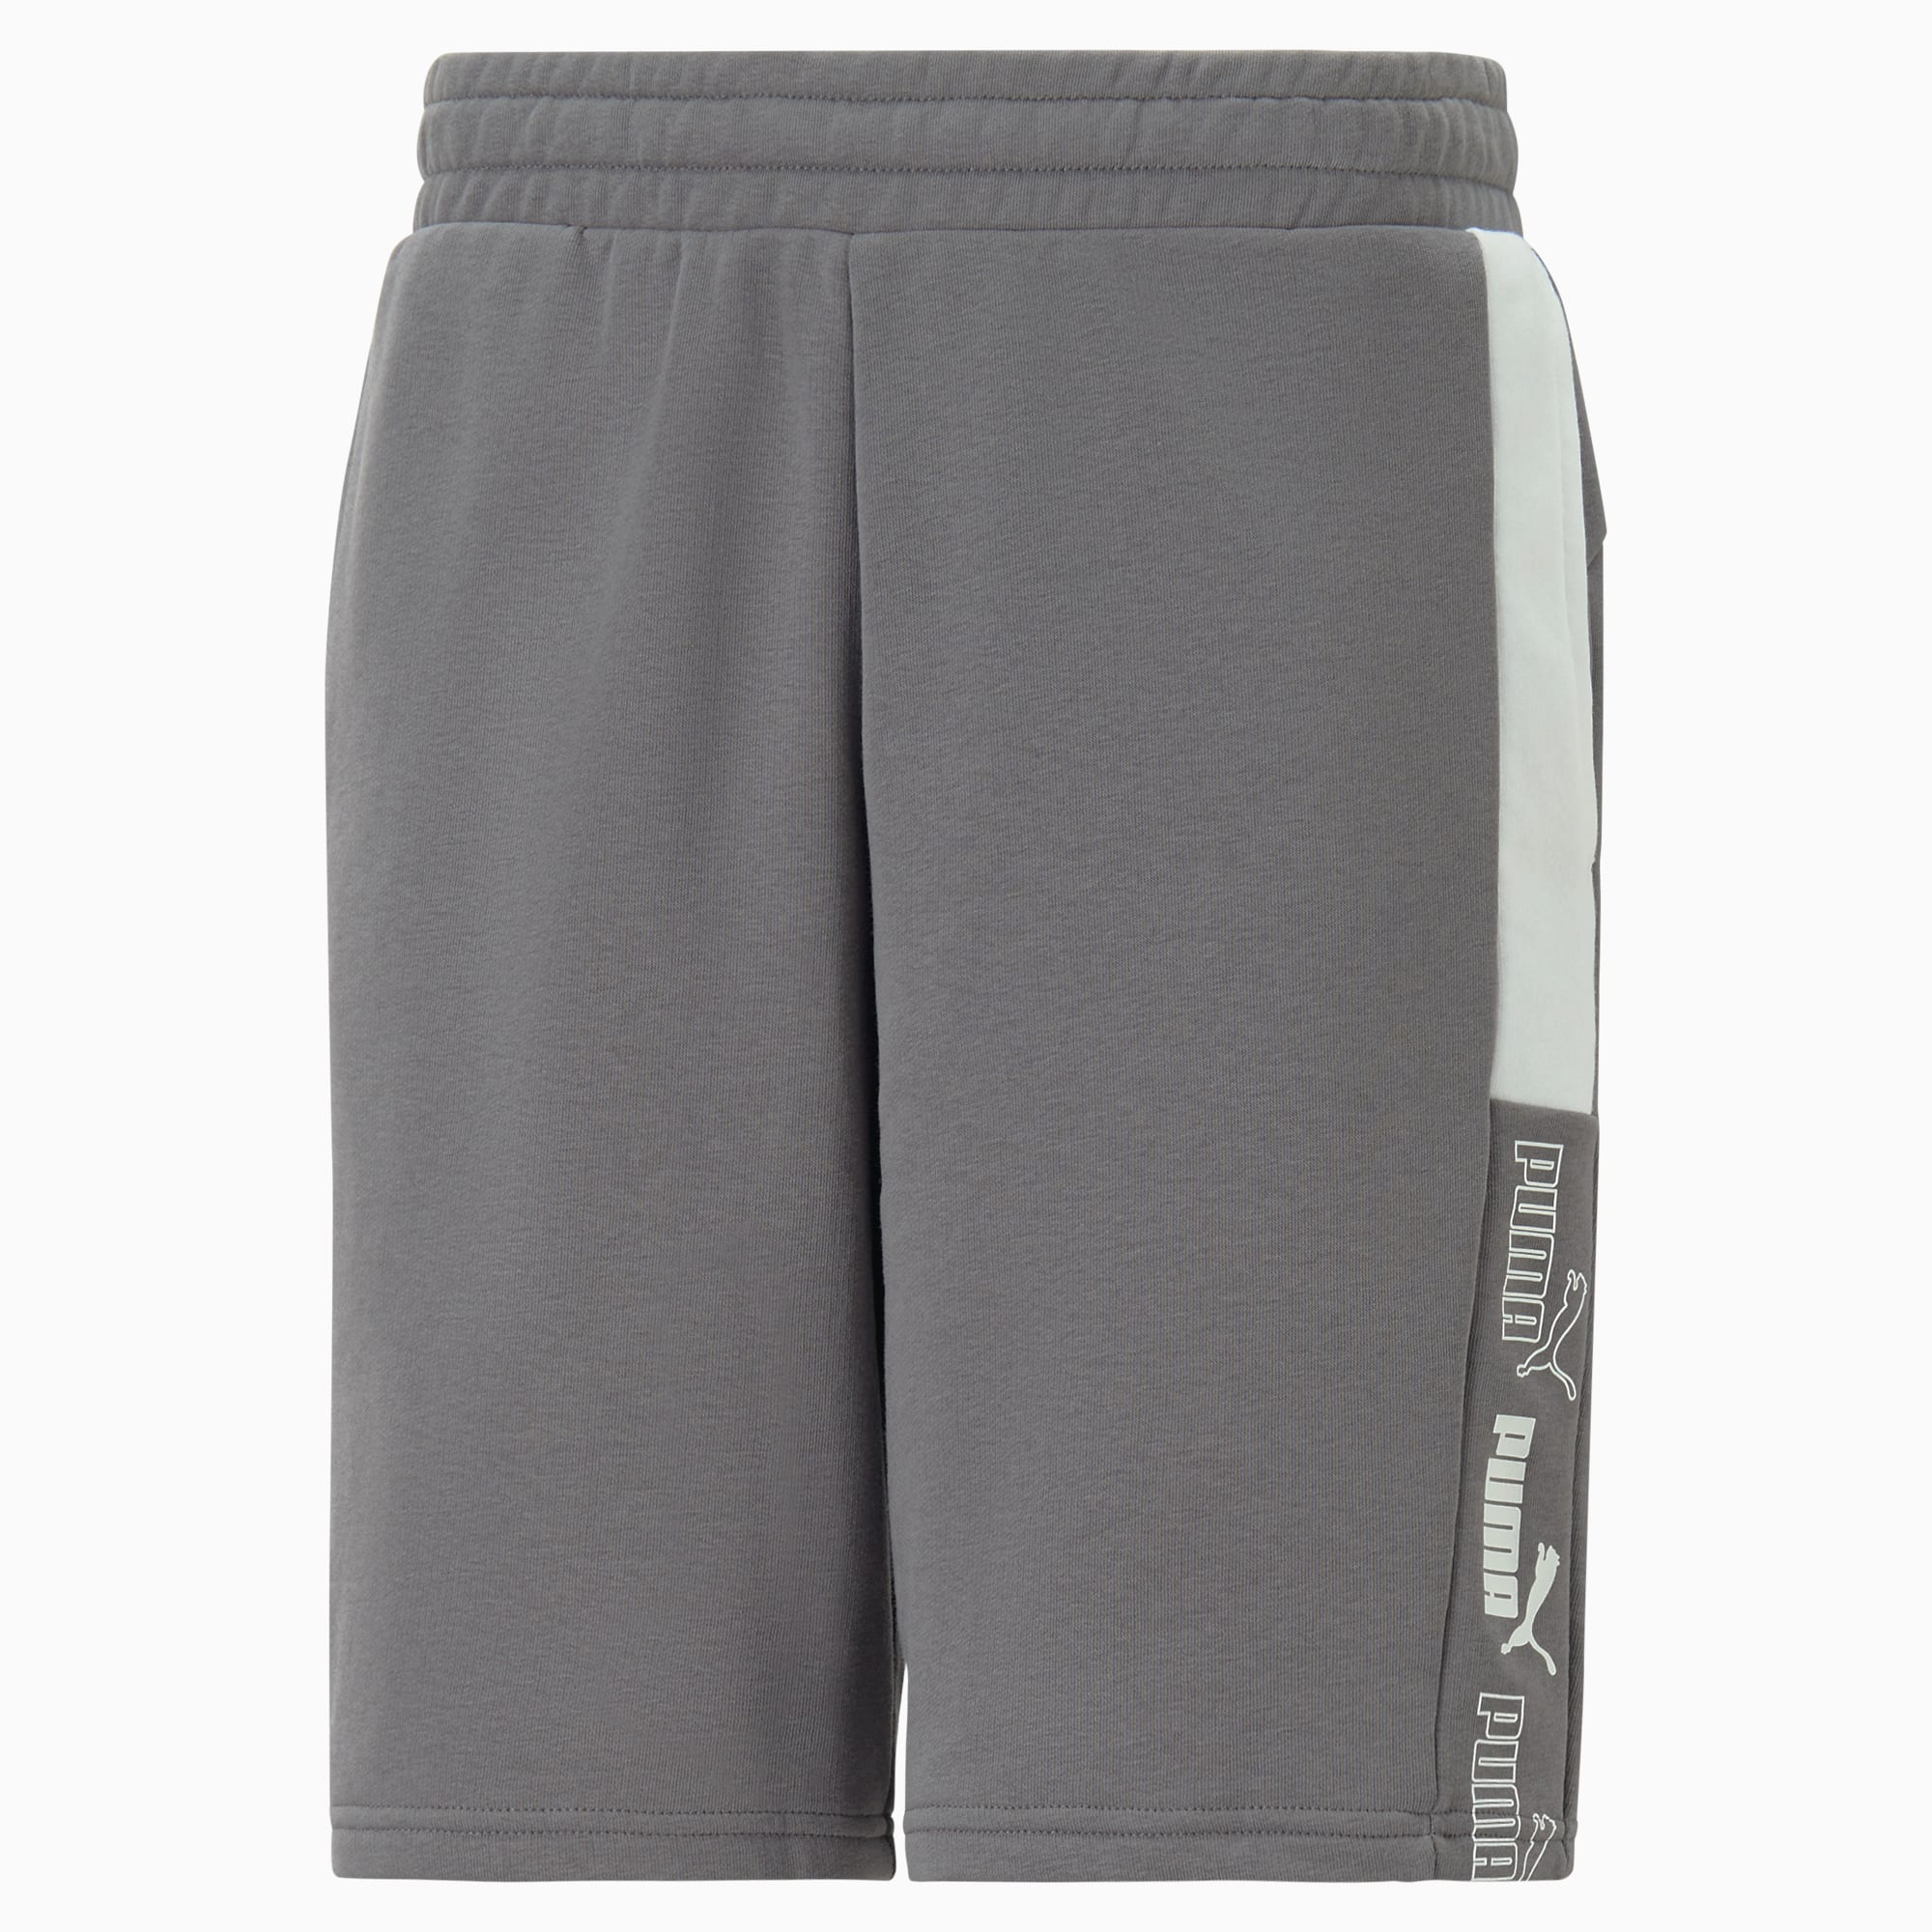 PUMA Block 9 Ft Shorts Men, Cool Dark Grey/White, Size 3XL, Clothing